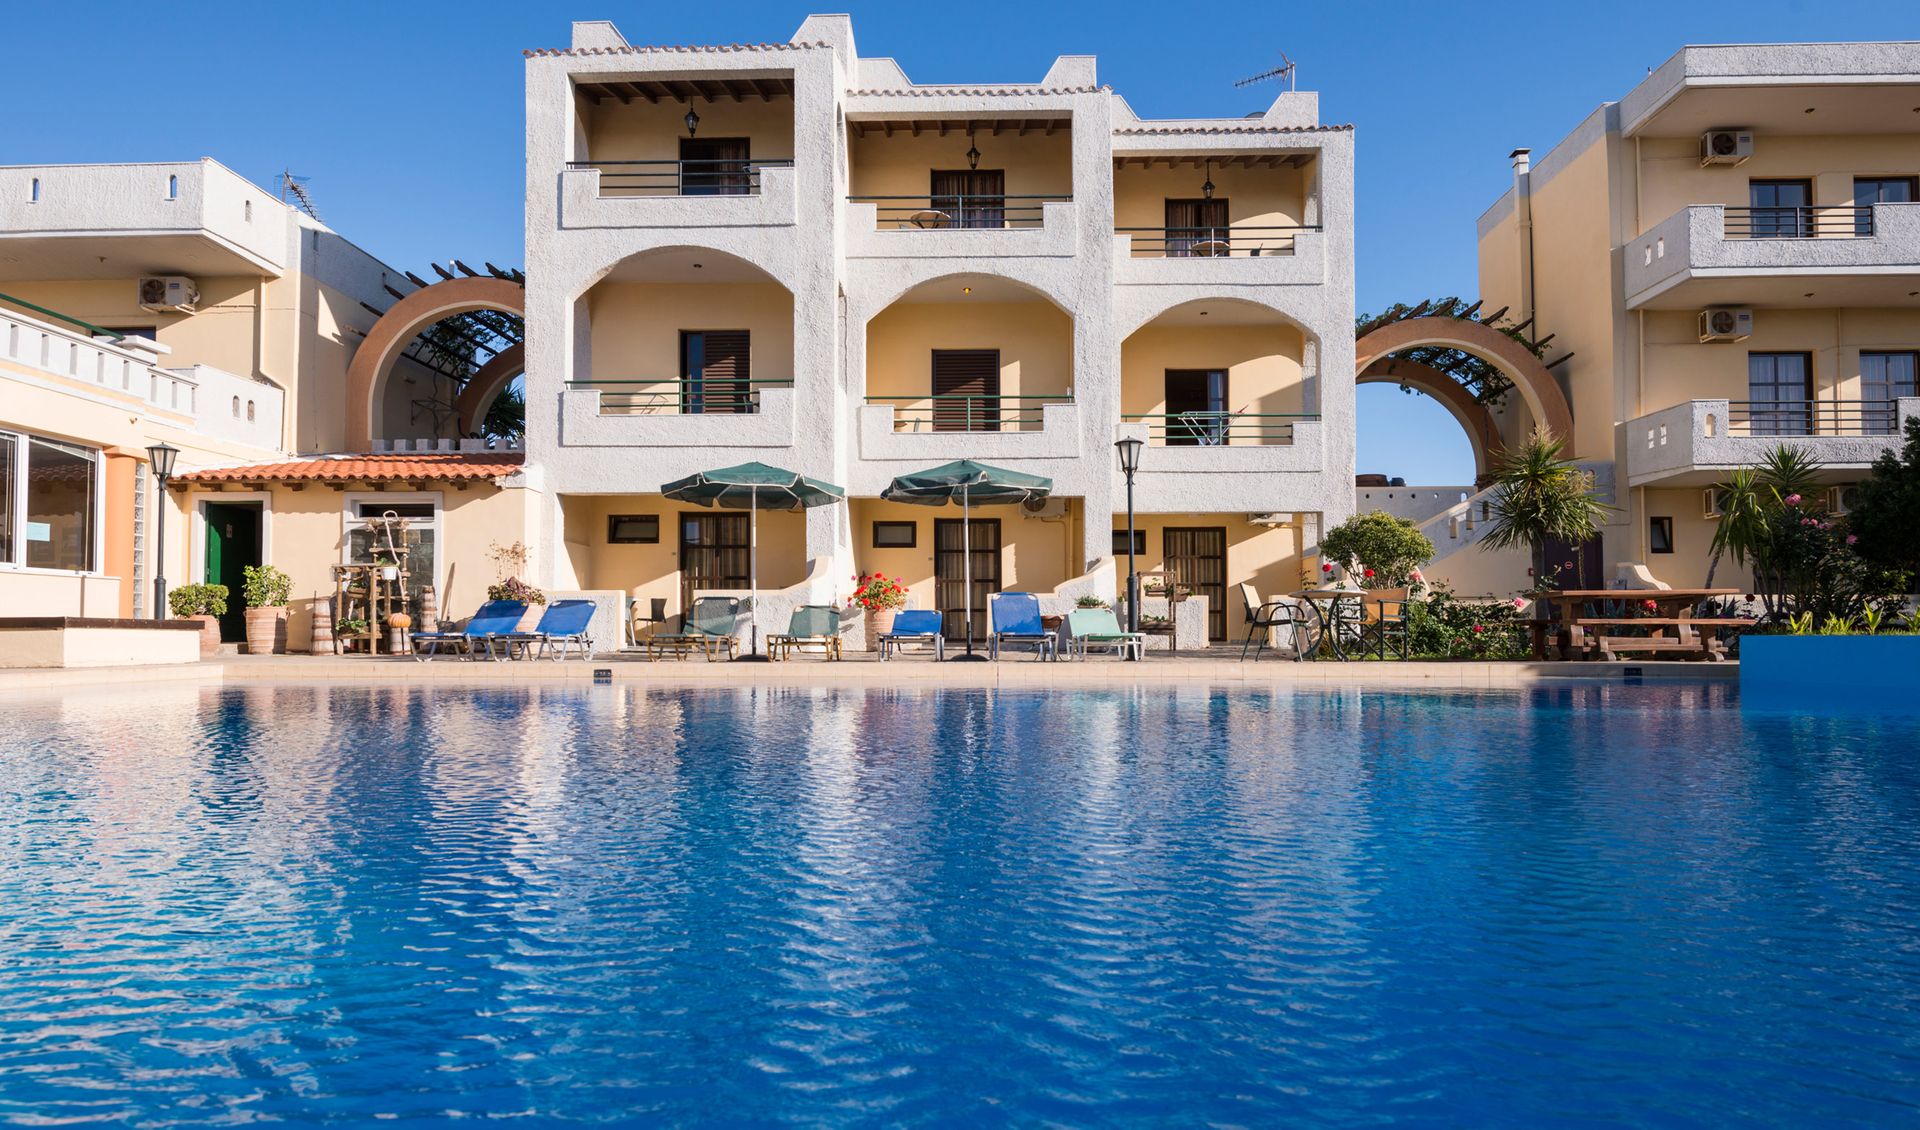 Nireas Hotel - Χανιά, Κρήτη ✦ 2 Ημέρες (1 Διανυκτέρευση) ✦ 2 άτομα + 1 παιδί έως 11 ετών ✦ Χωρίς Πρωινό ✦ έως 30/09/2022 ✦ Κοντά στην Παραλία!